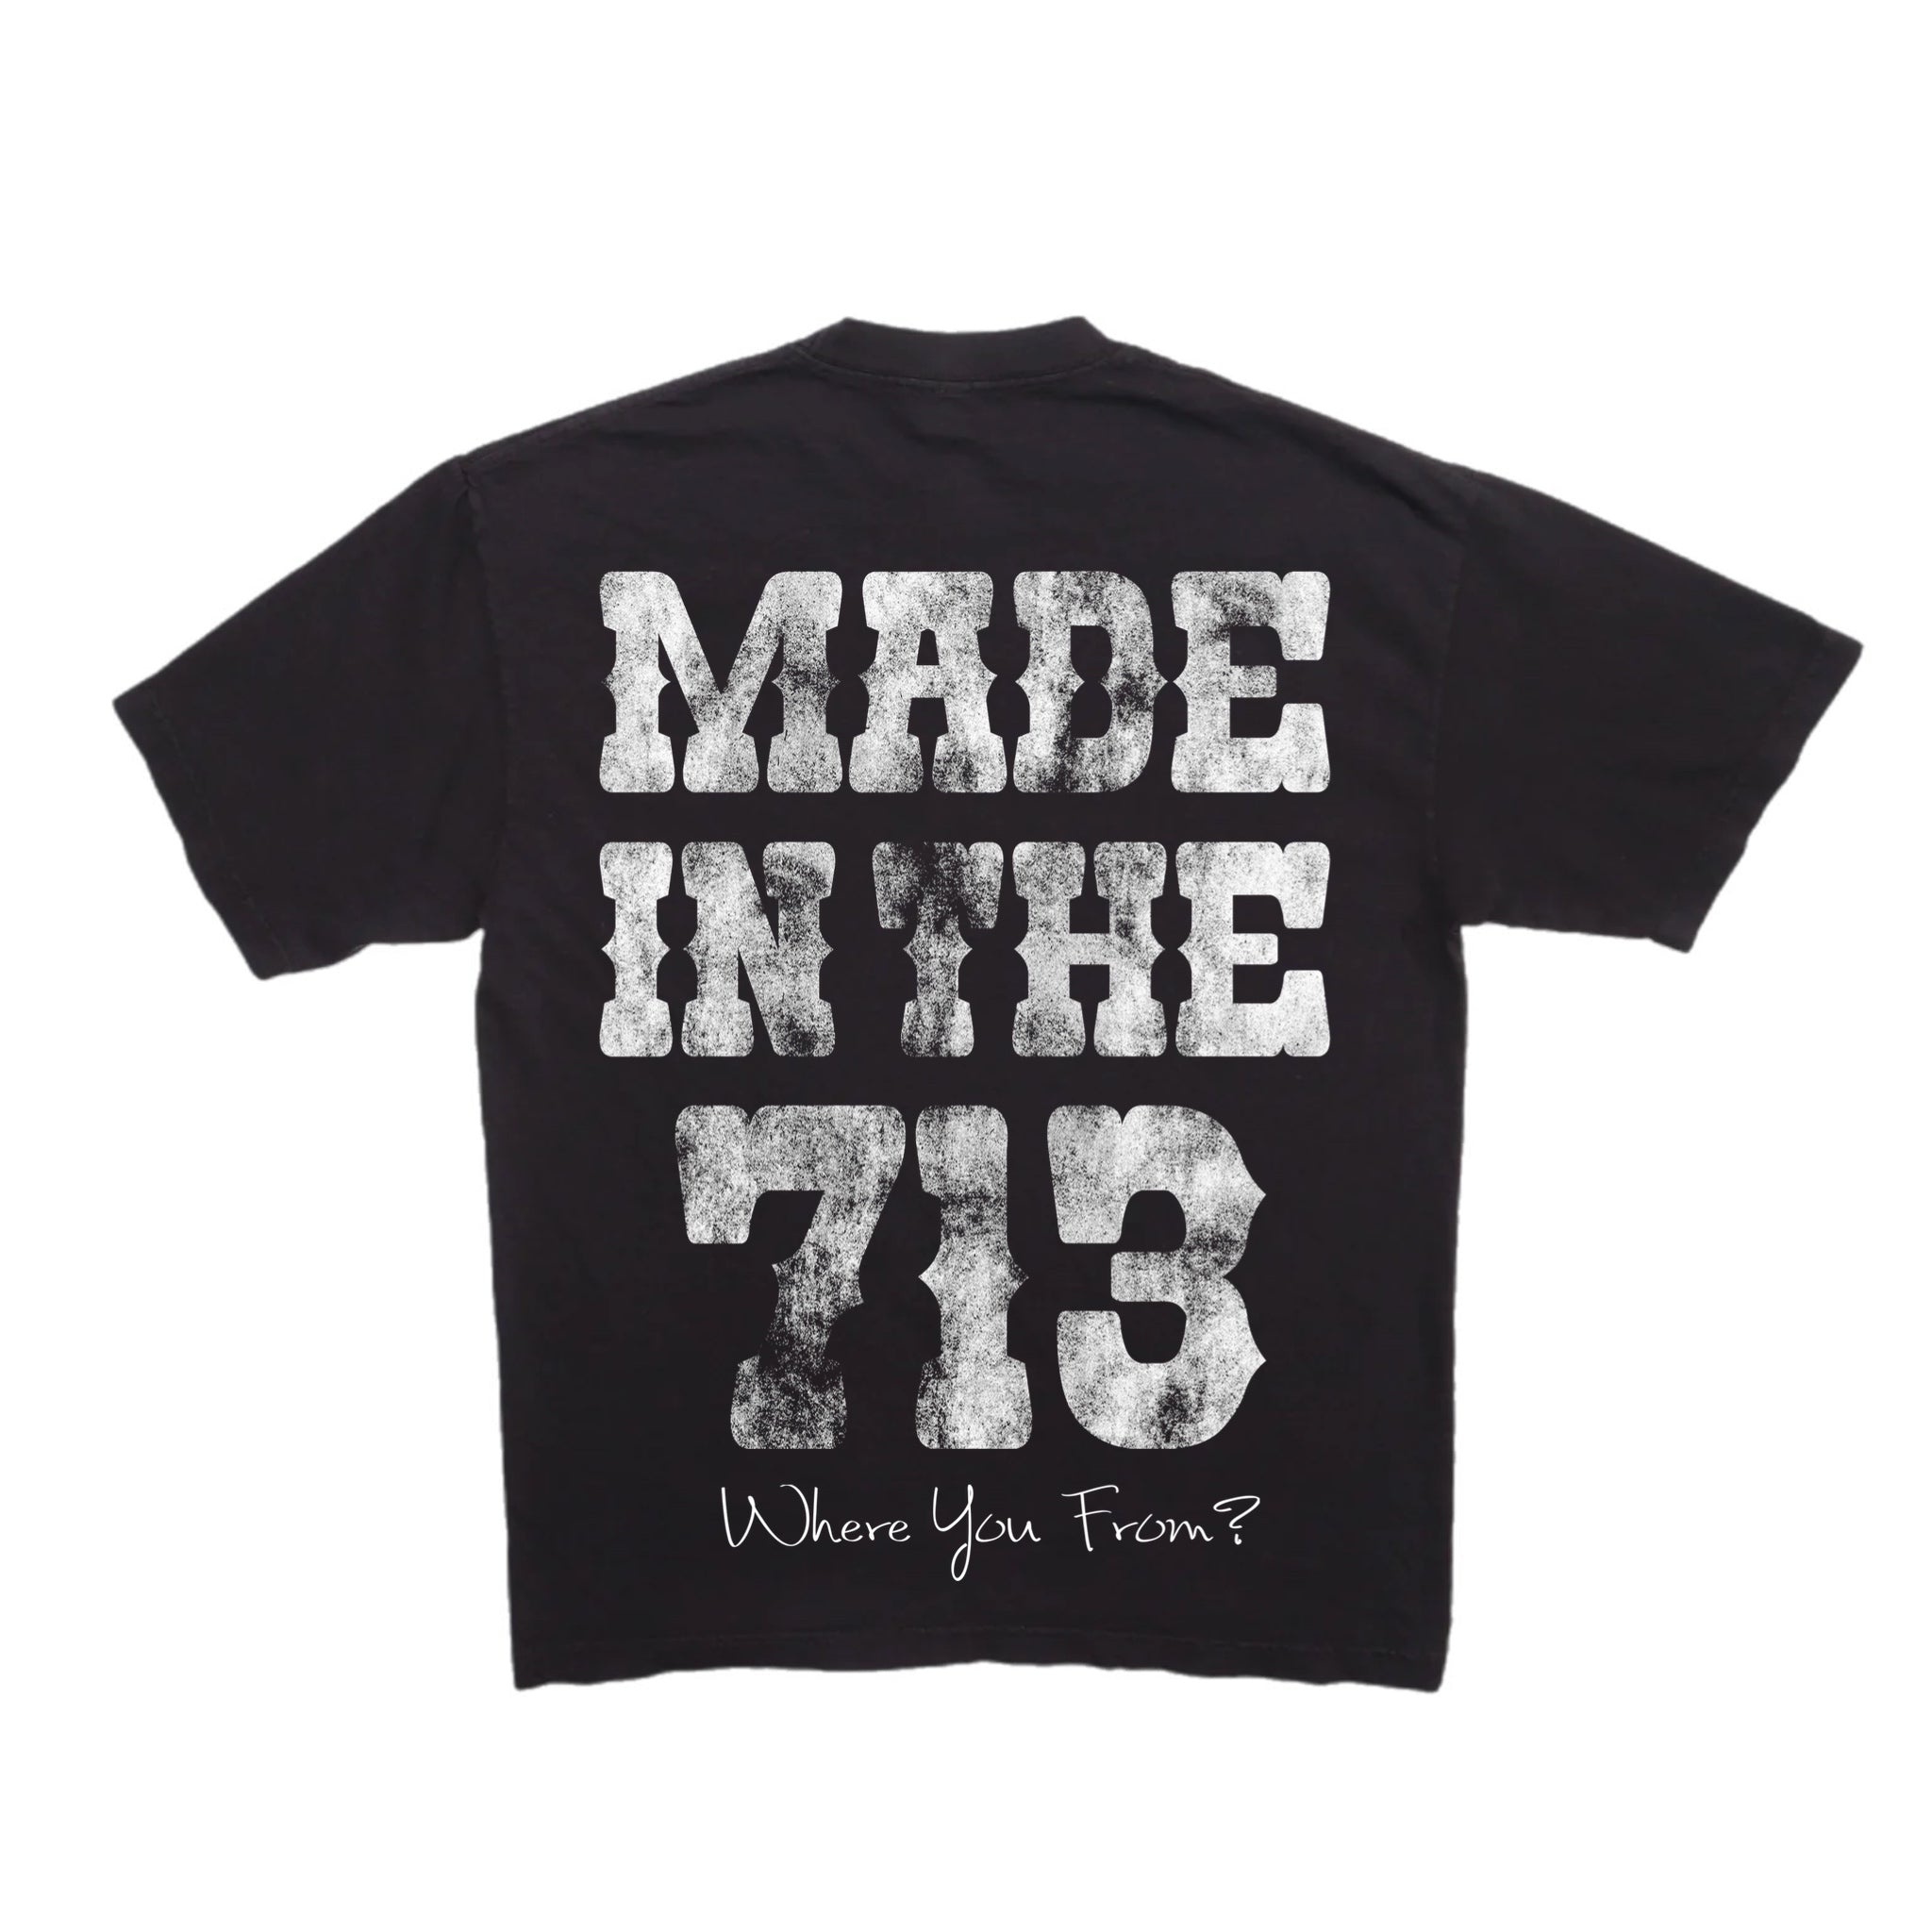 M.I.T 713 Bull T-Shirt Black